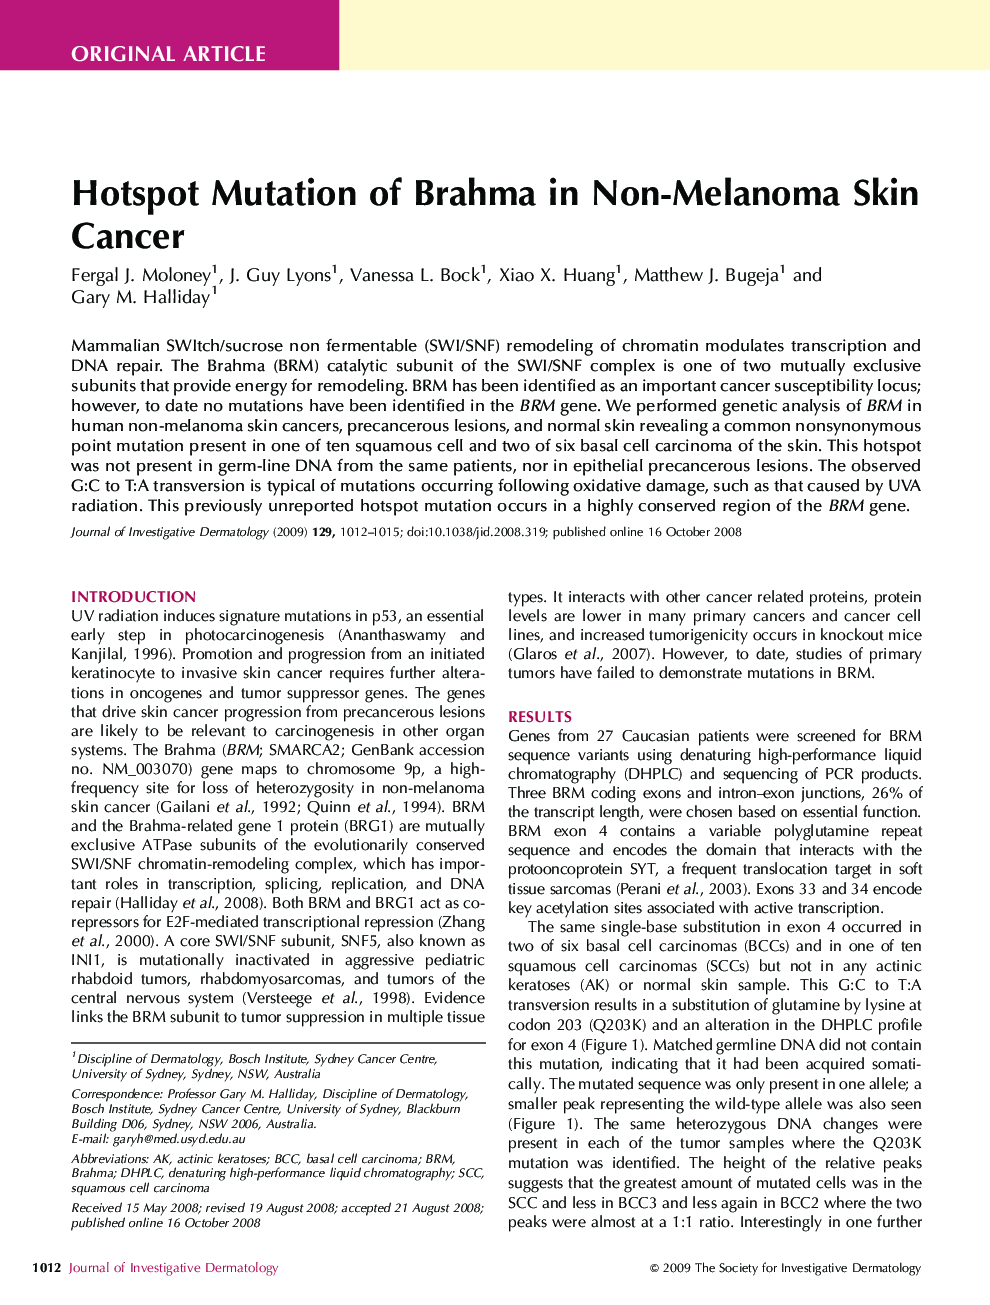 Hotspot Mutation of Brahma in Non-Melanoma Skin Cancer 